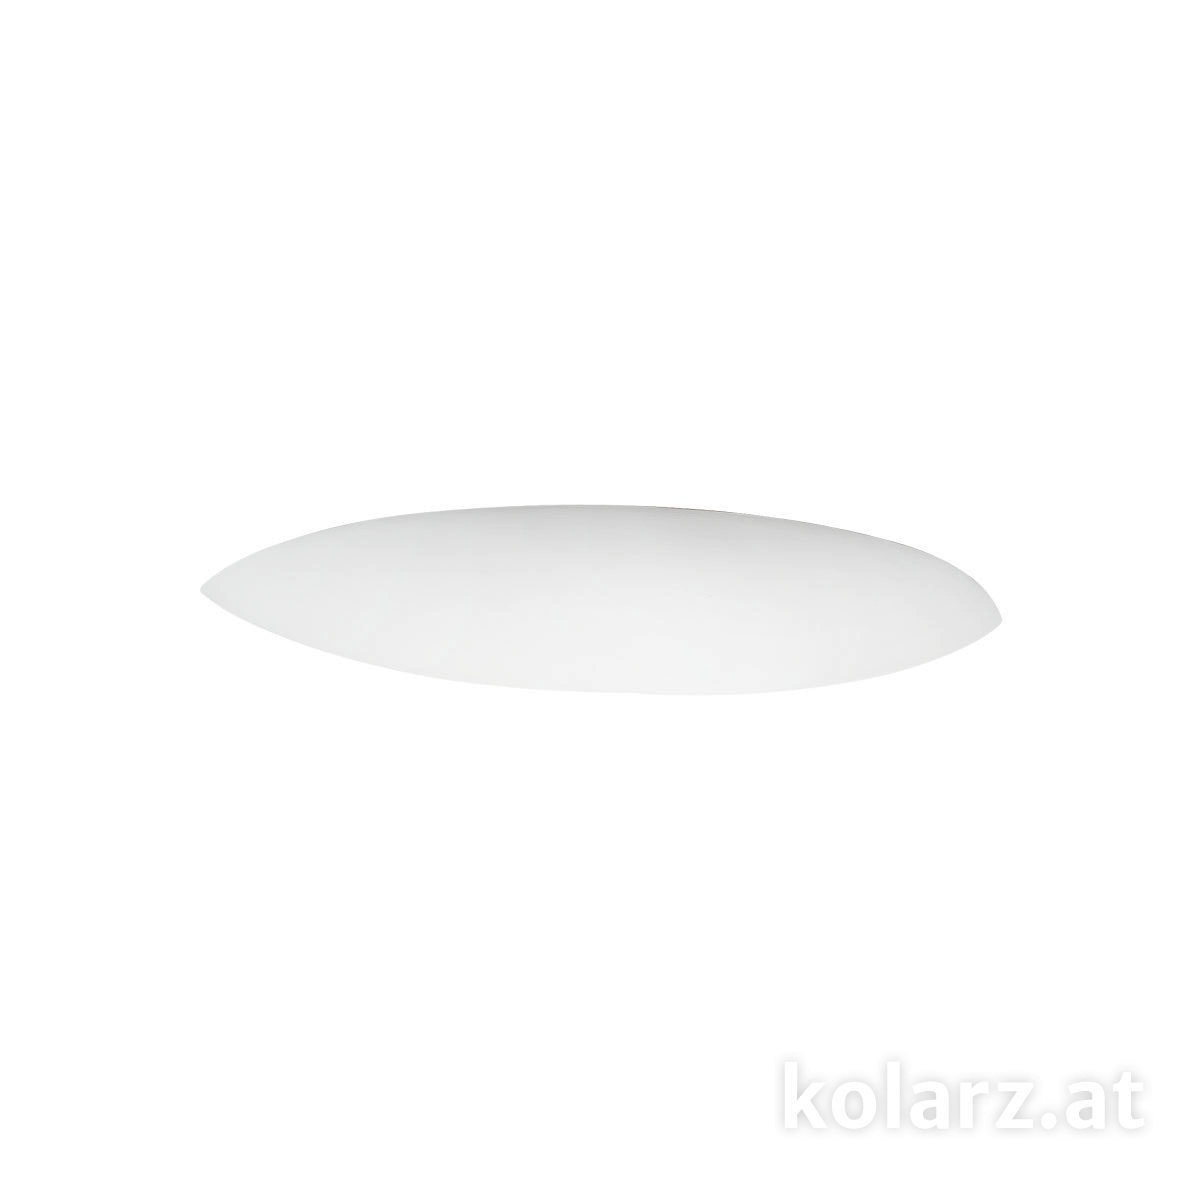 Wandleuchten & Wandlampen von KOLARZ Leuchten Elegance Wandleuchte 219.60.1